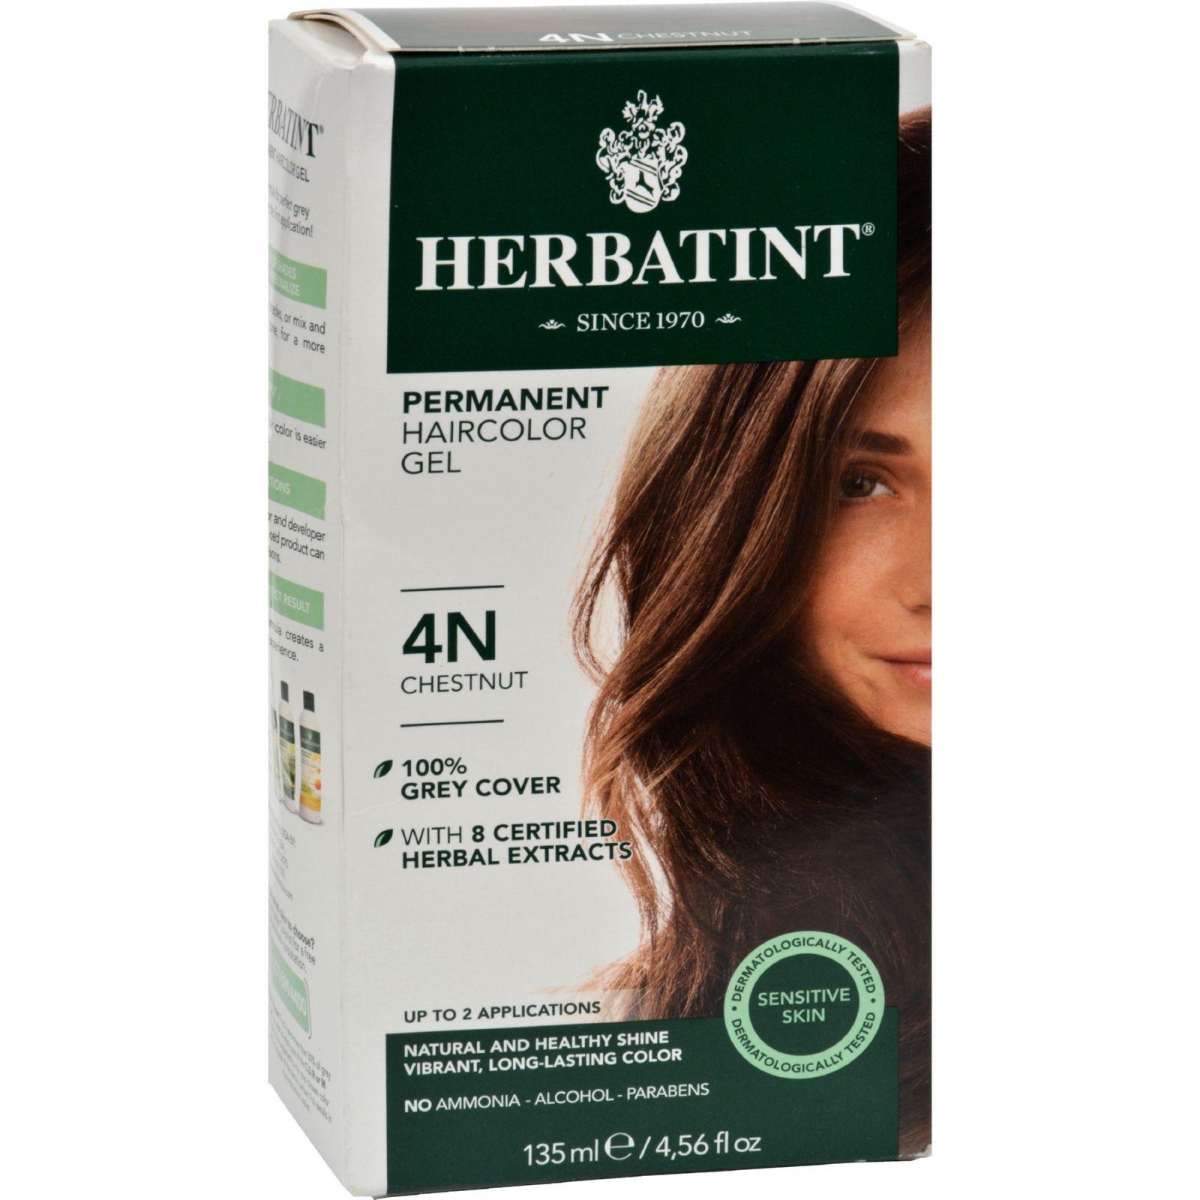 Hg0226654 135 Ml Permanent Herbal Haircolor Gel, 4n Chestnut